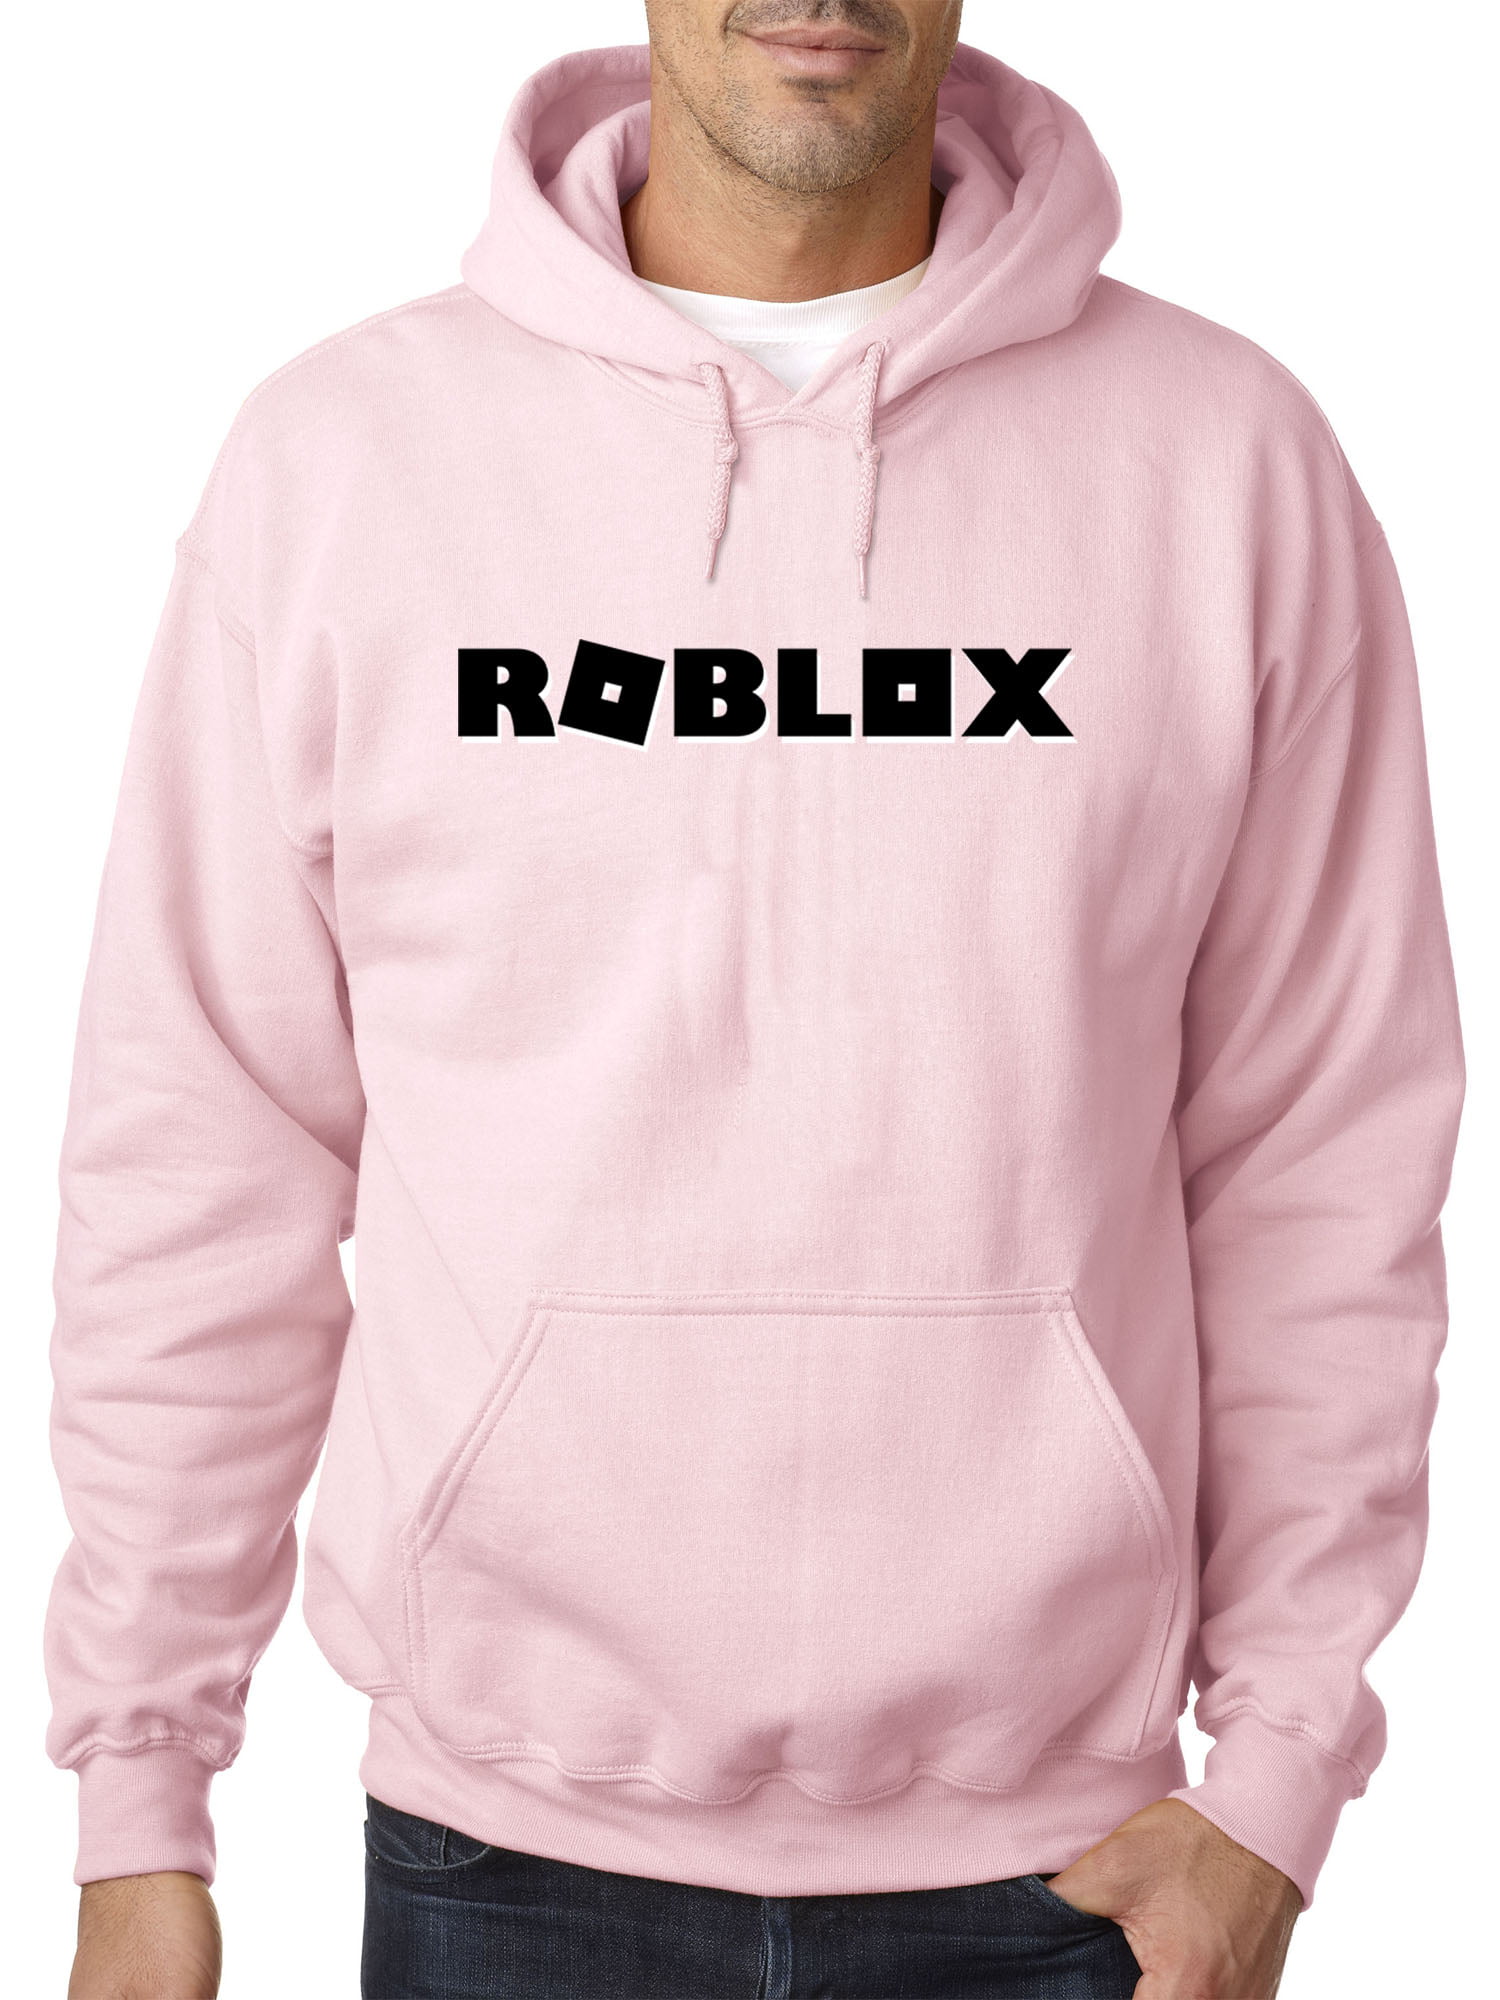 Trendy Usa Trendy Usa 1168 Adult Hoodie Roblox Block Logo Game Accent Sweatshirt Medium Light Pink Walmart Com - pink roblox logo￼